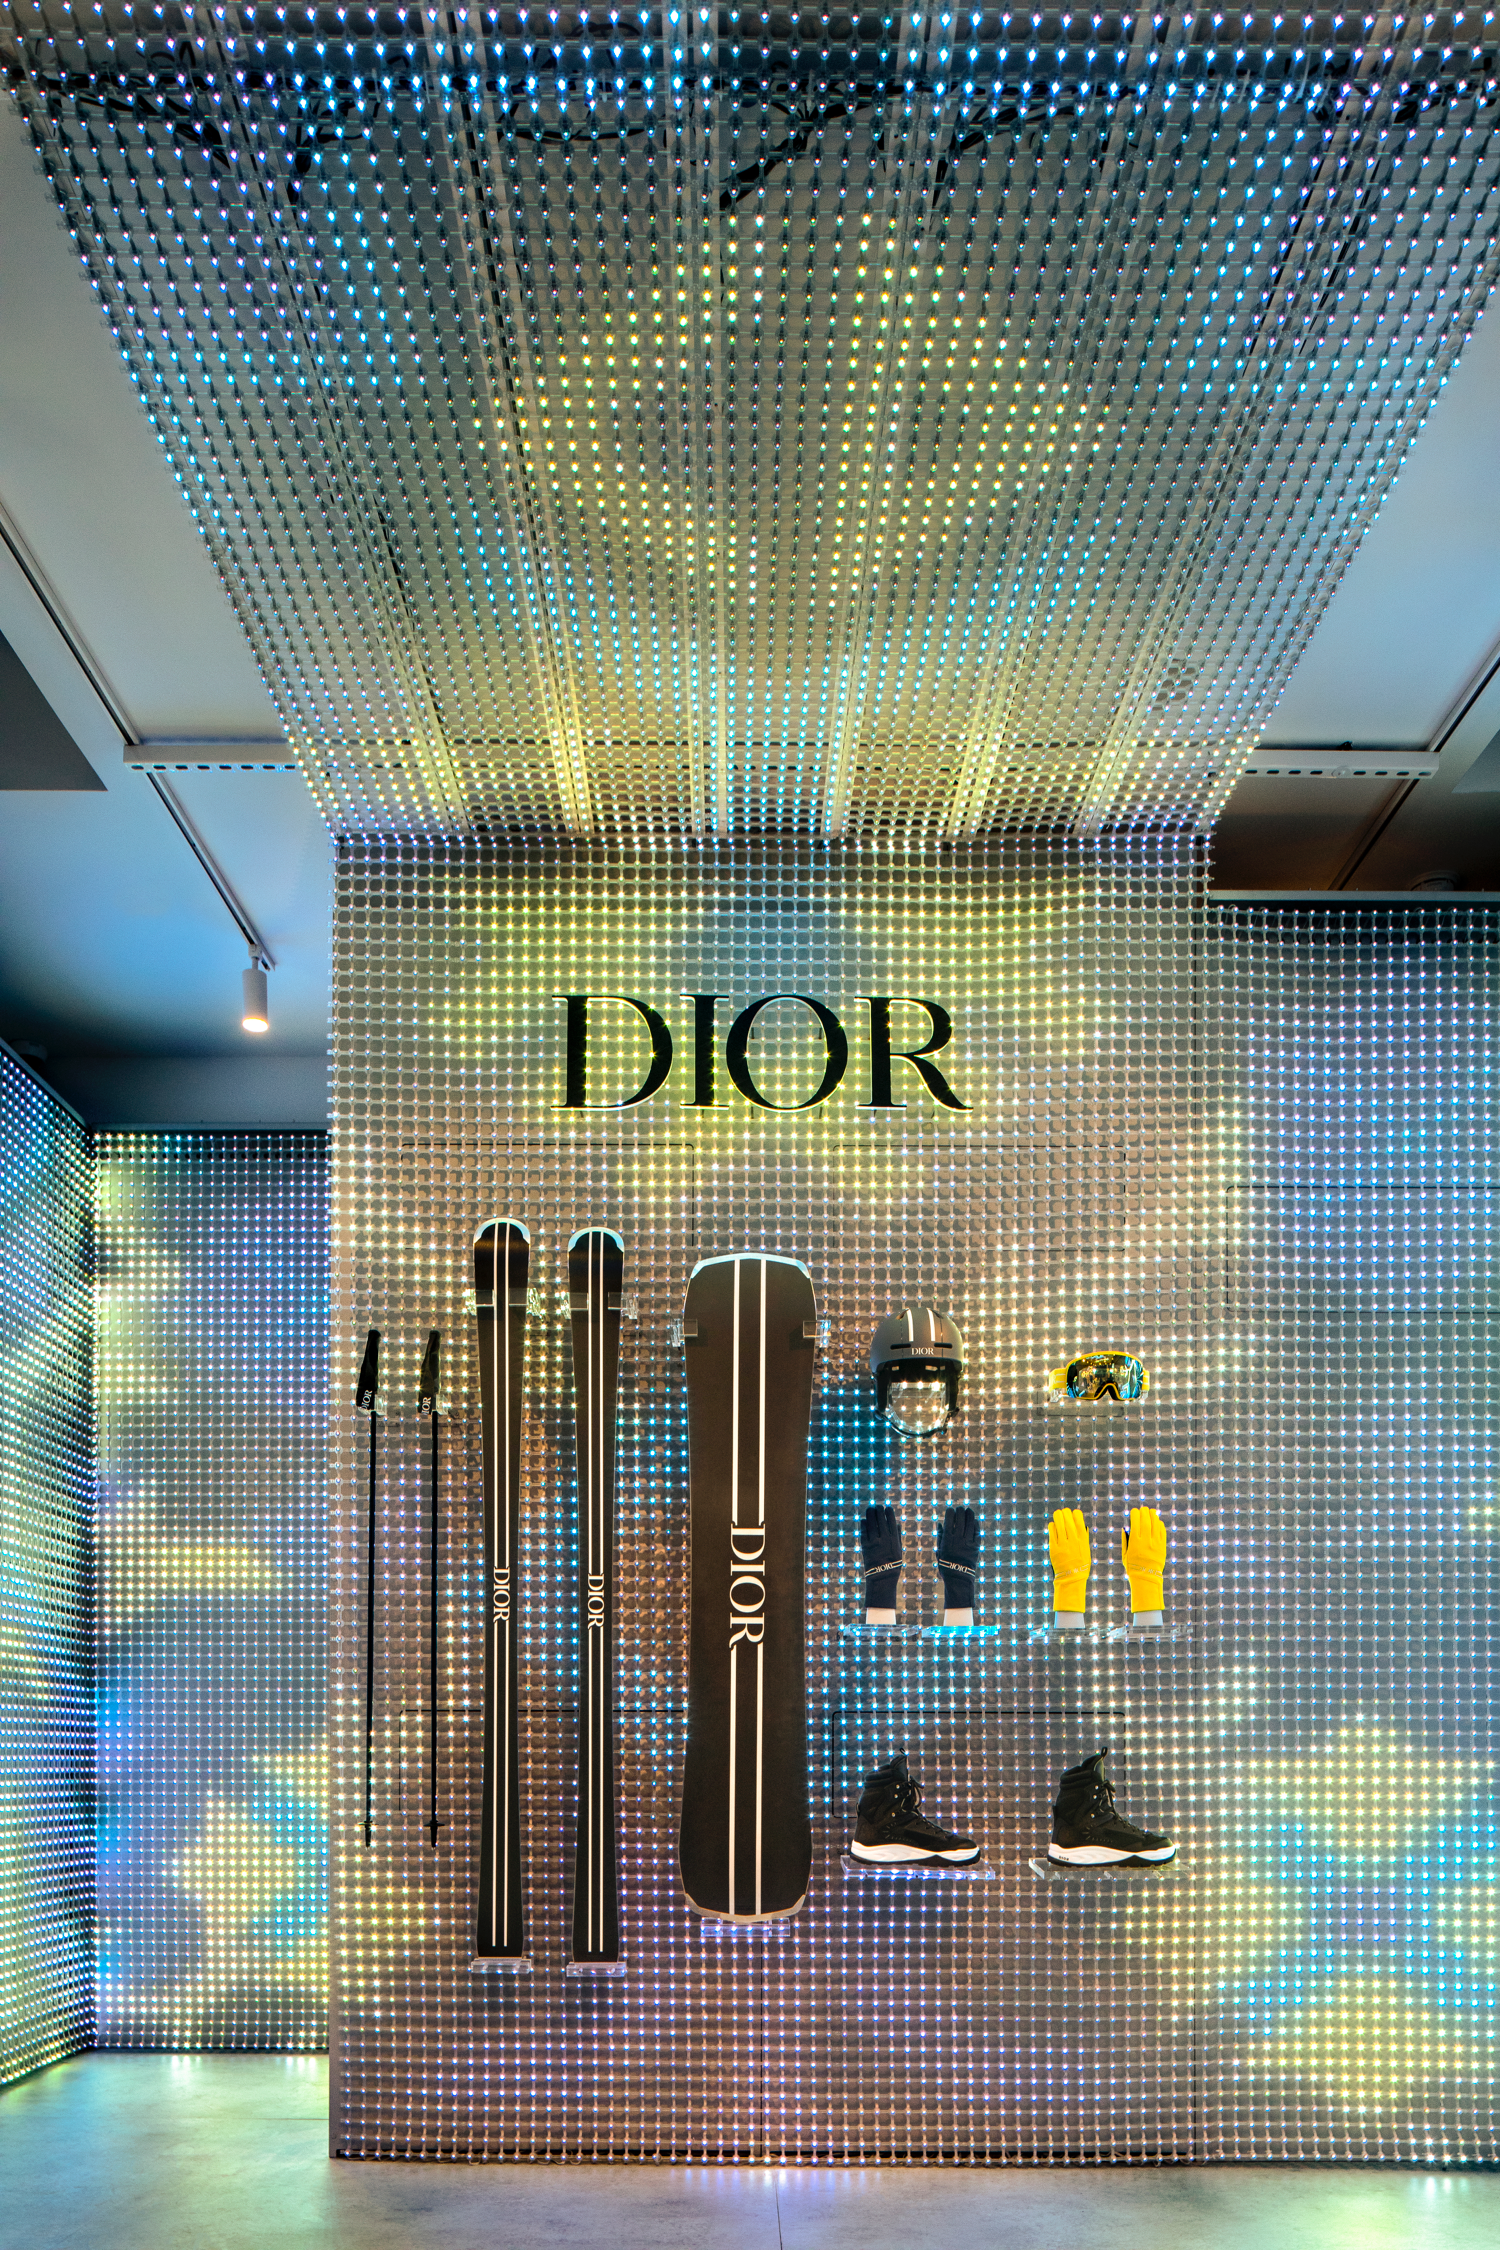 Dior Pop-Up Store Nueva York - Luxury RetailLuxury Retail